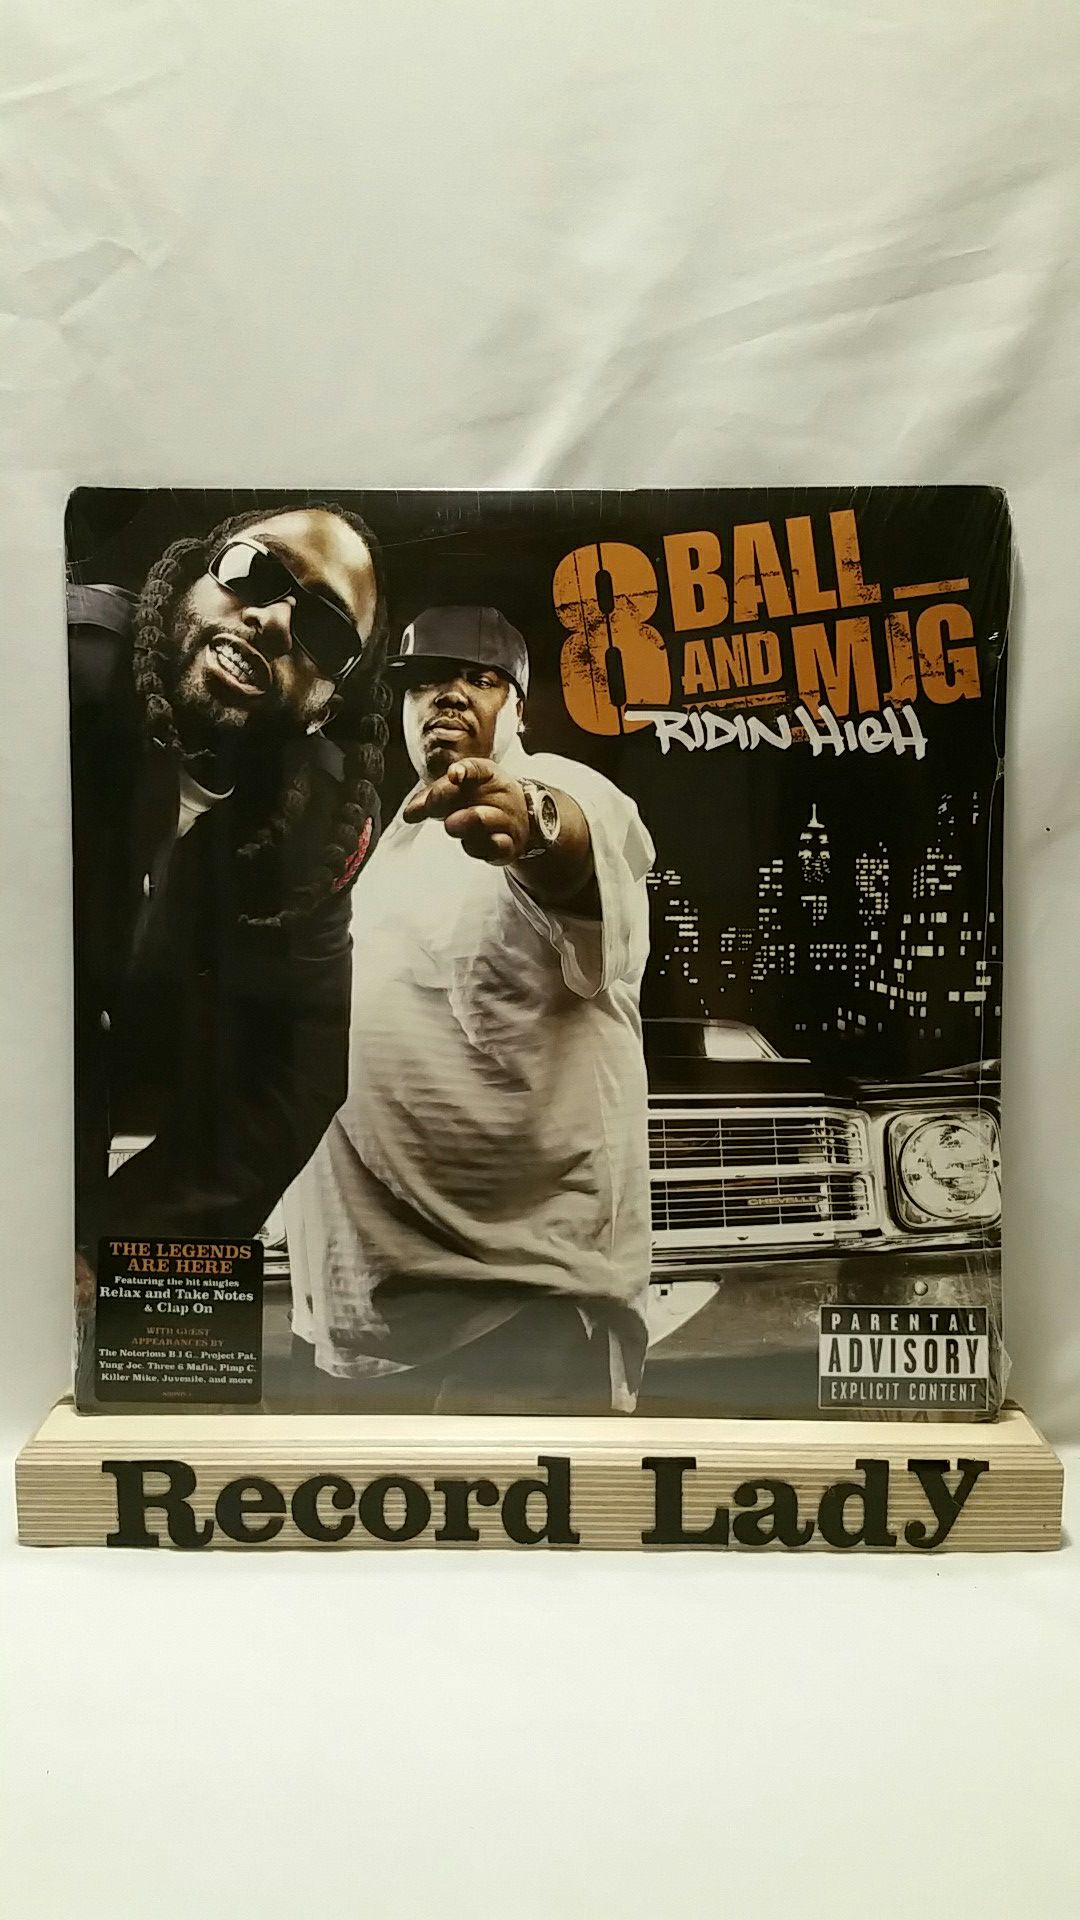 8 Ball And MJG "Ridin' High" Ft. Notorious B.I.G, Three 6 Mafia etc. vinyl record hip hop/ rap